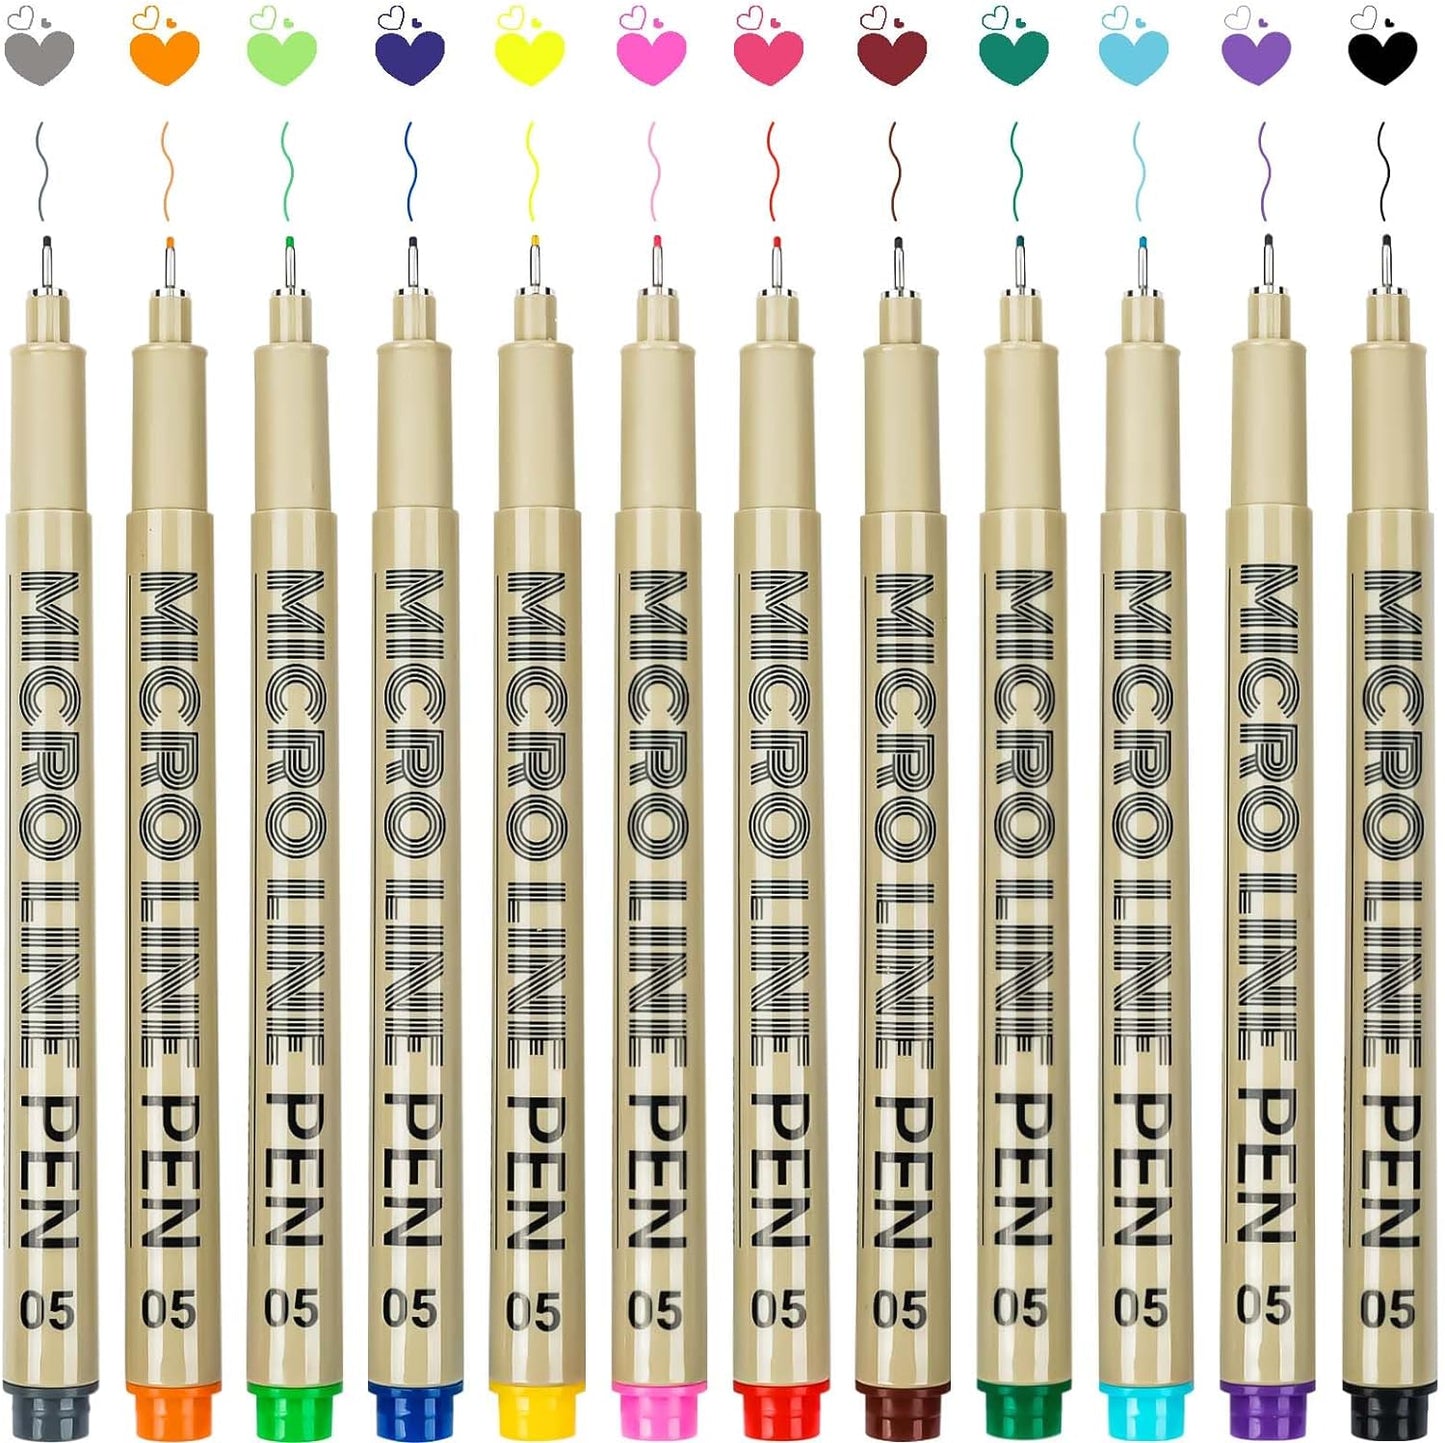 12 Colors 05 Micro Fineliner Drawing Art Pens, Waterproof Archival Ink Pens, 0.45Mm Multiliner Fine Liner Pens for Illustration Technical Sketching Manga Scrapbooking Journaling Zentangle